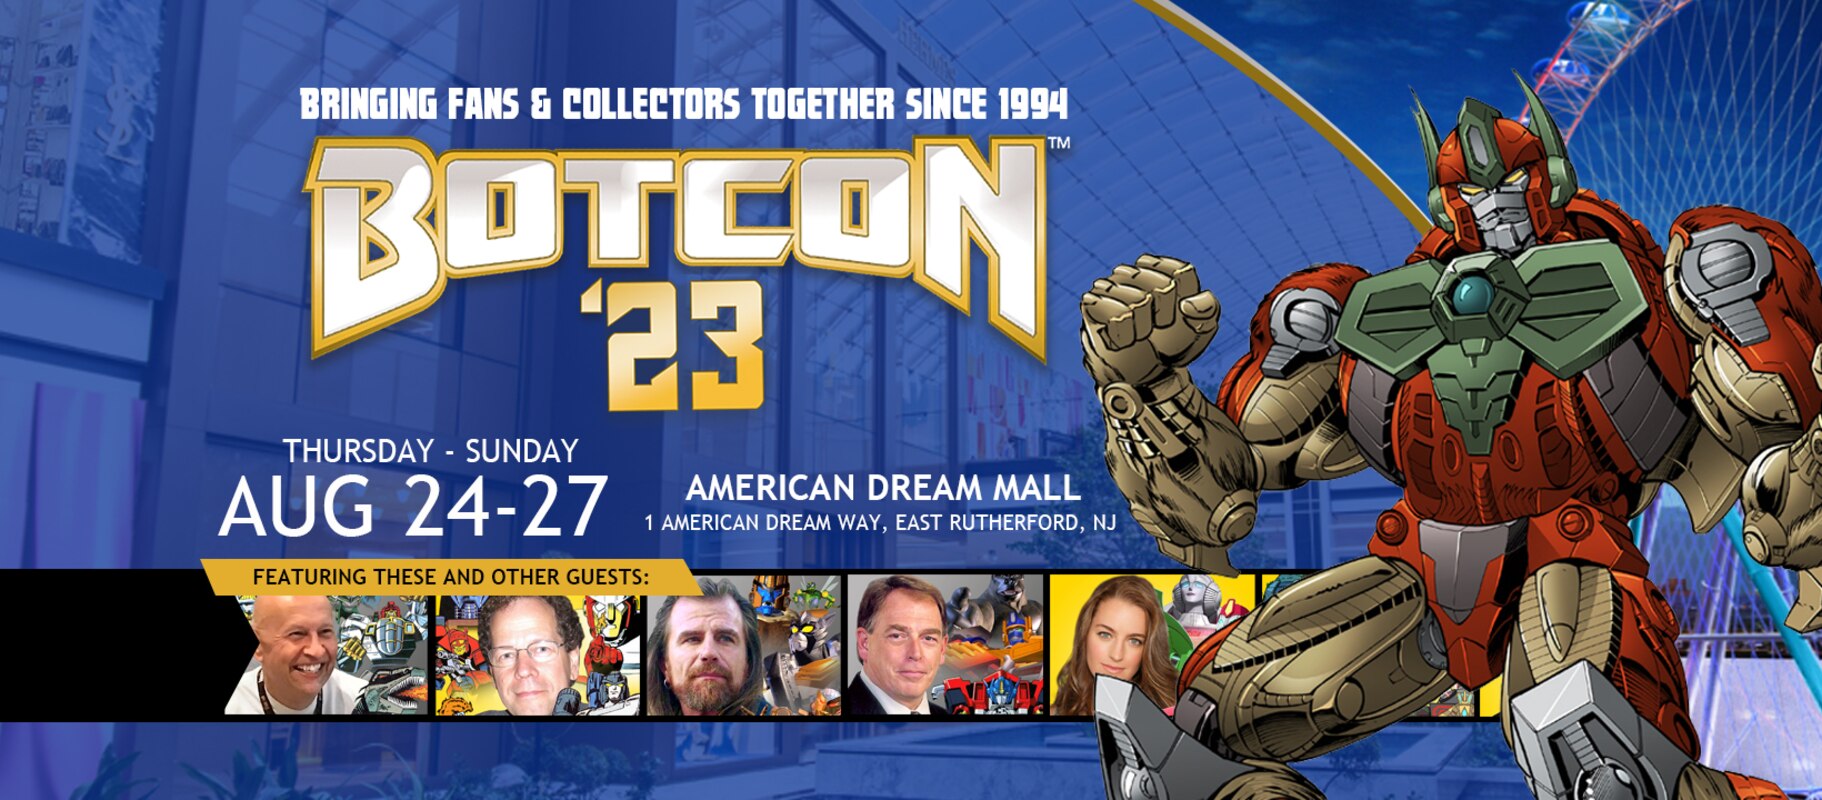 BotCon 2023 Dinostorm Boxed Set Images, Celebrity Guests Budiansky, More News